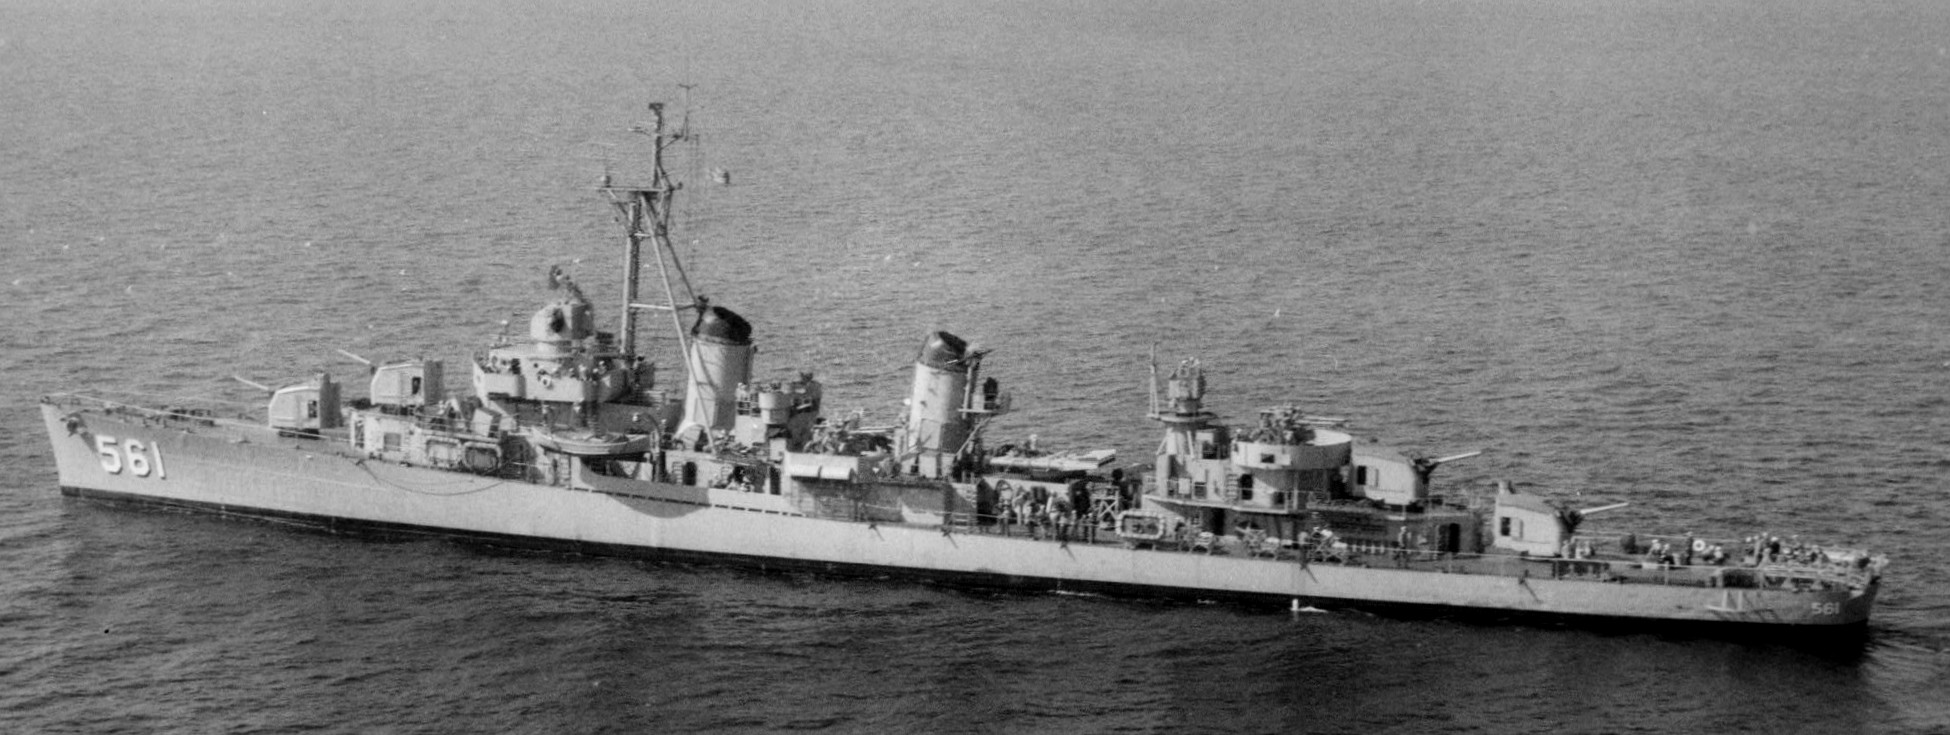 dd-561 uss prichett d-555 its geniere fante fletcher class destroyer 02